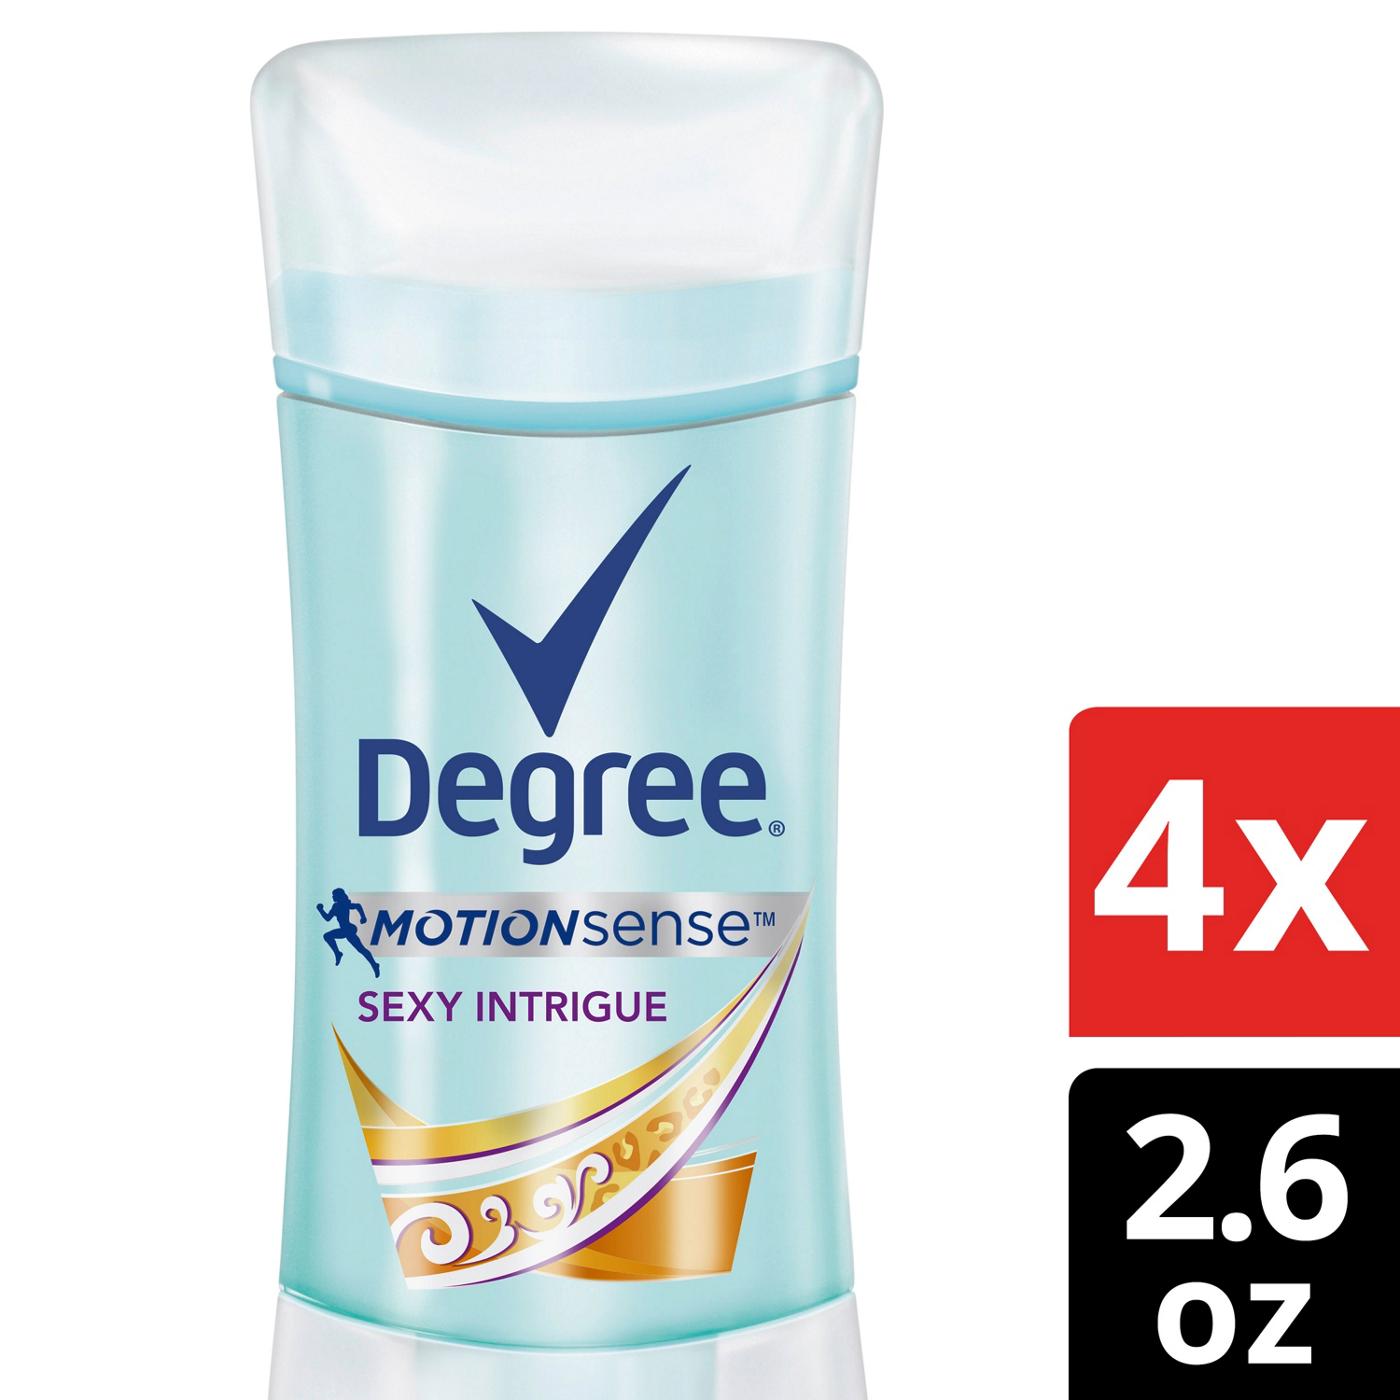 Degree Advanced MotionSense Antiperspirant Deodorant - Sexy Intrigue; image 3 of 3